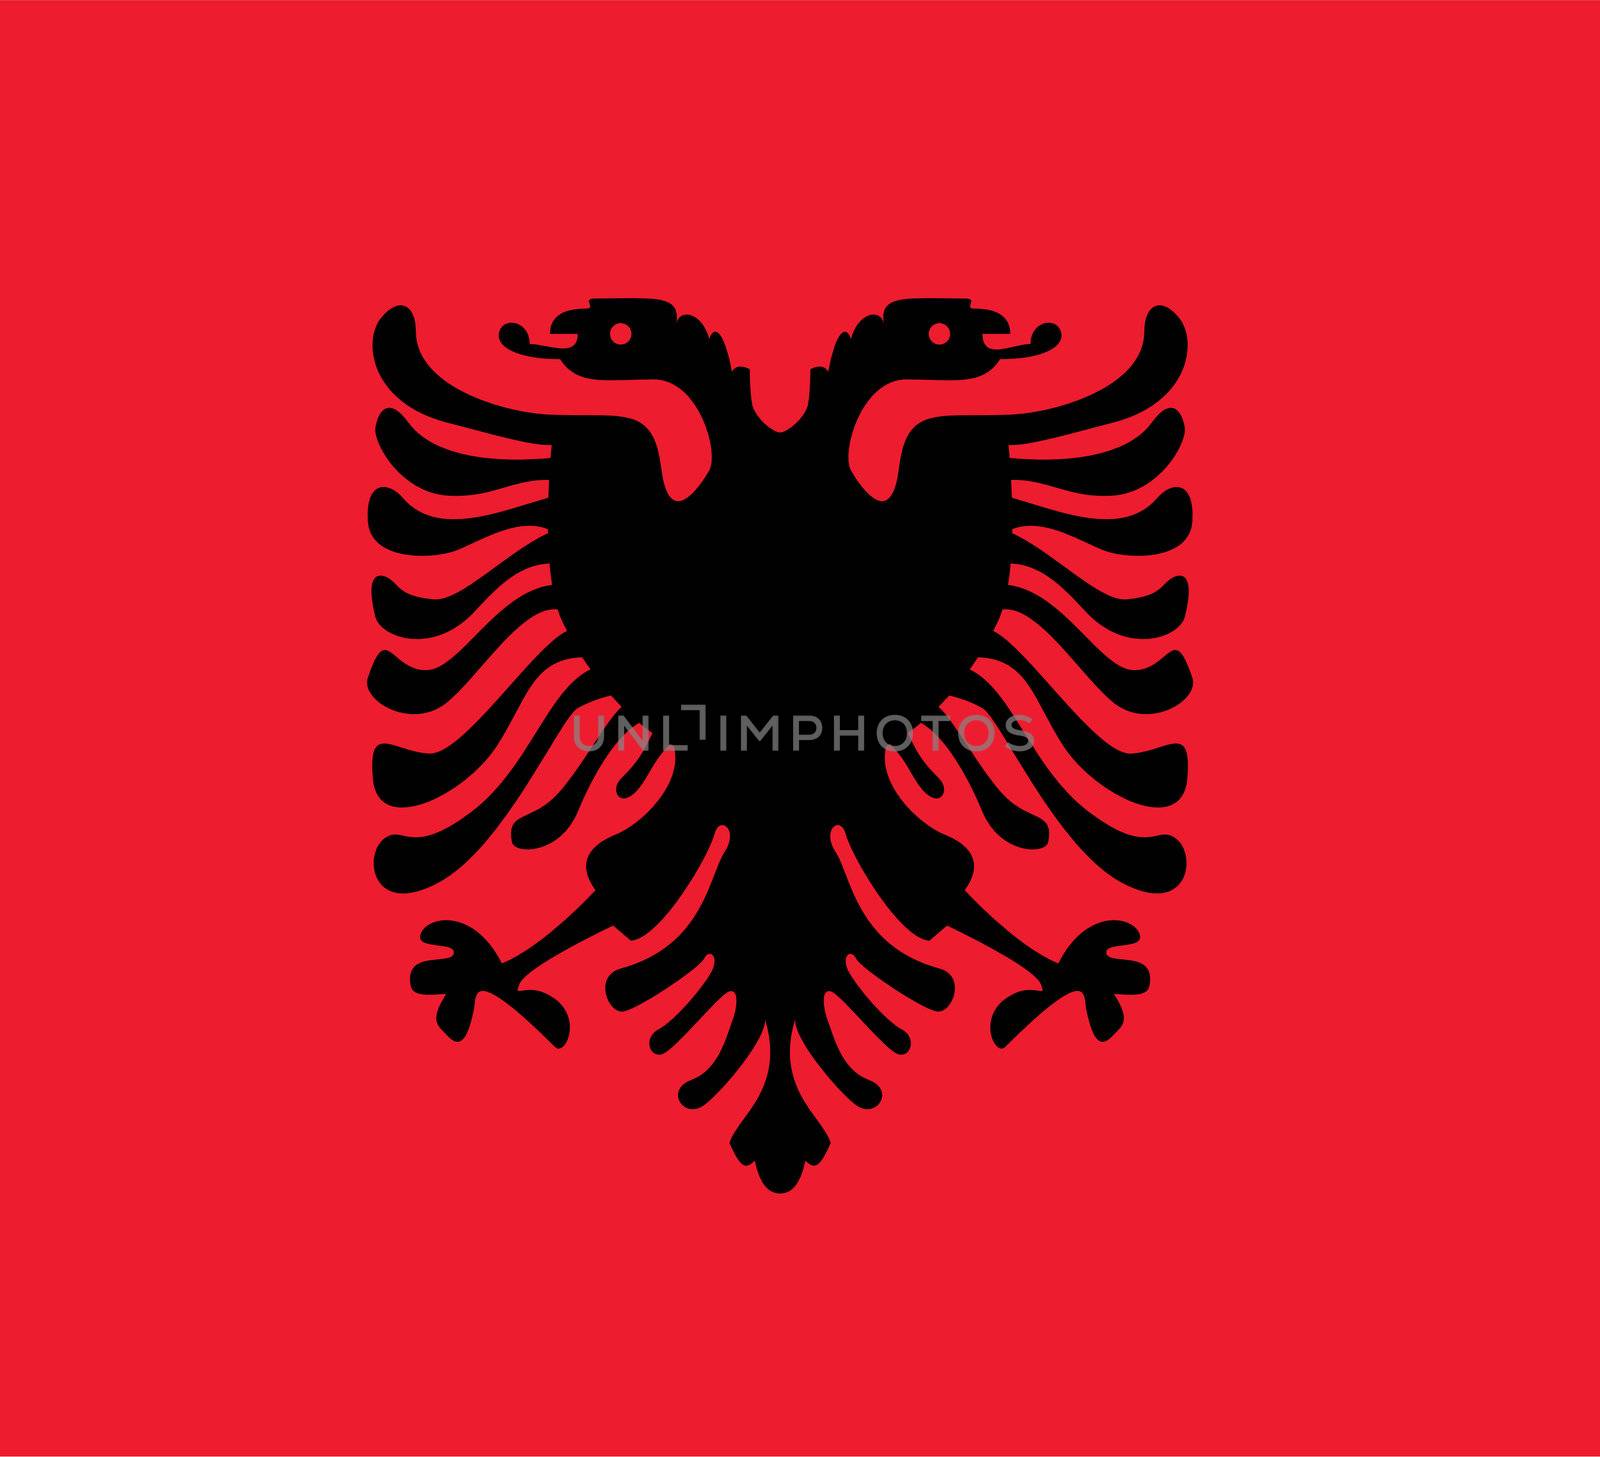 Albania flag by mereutaandrei